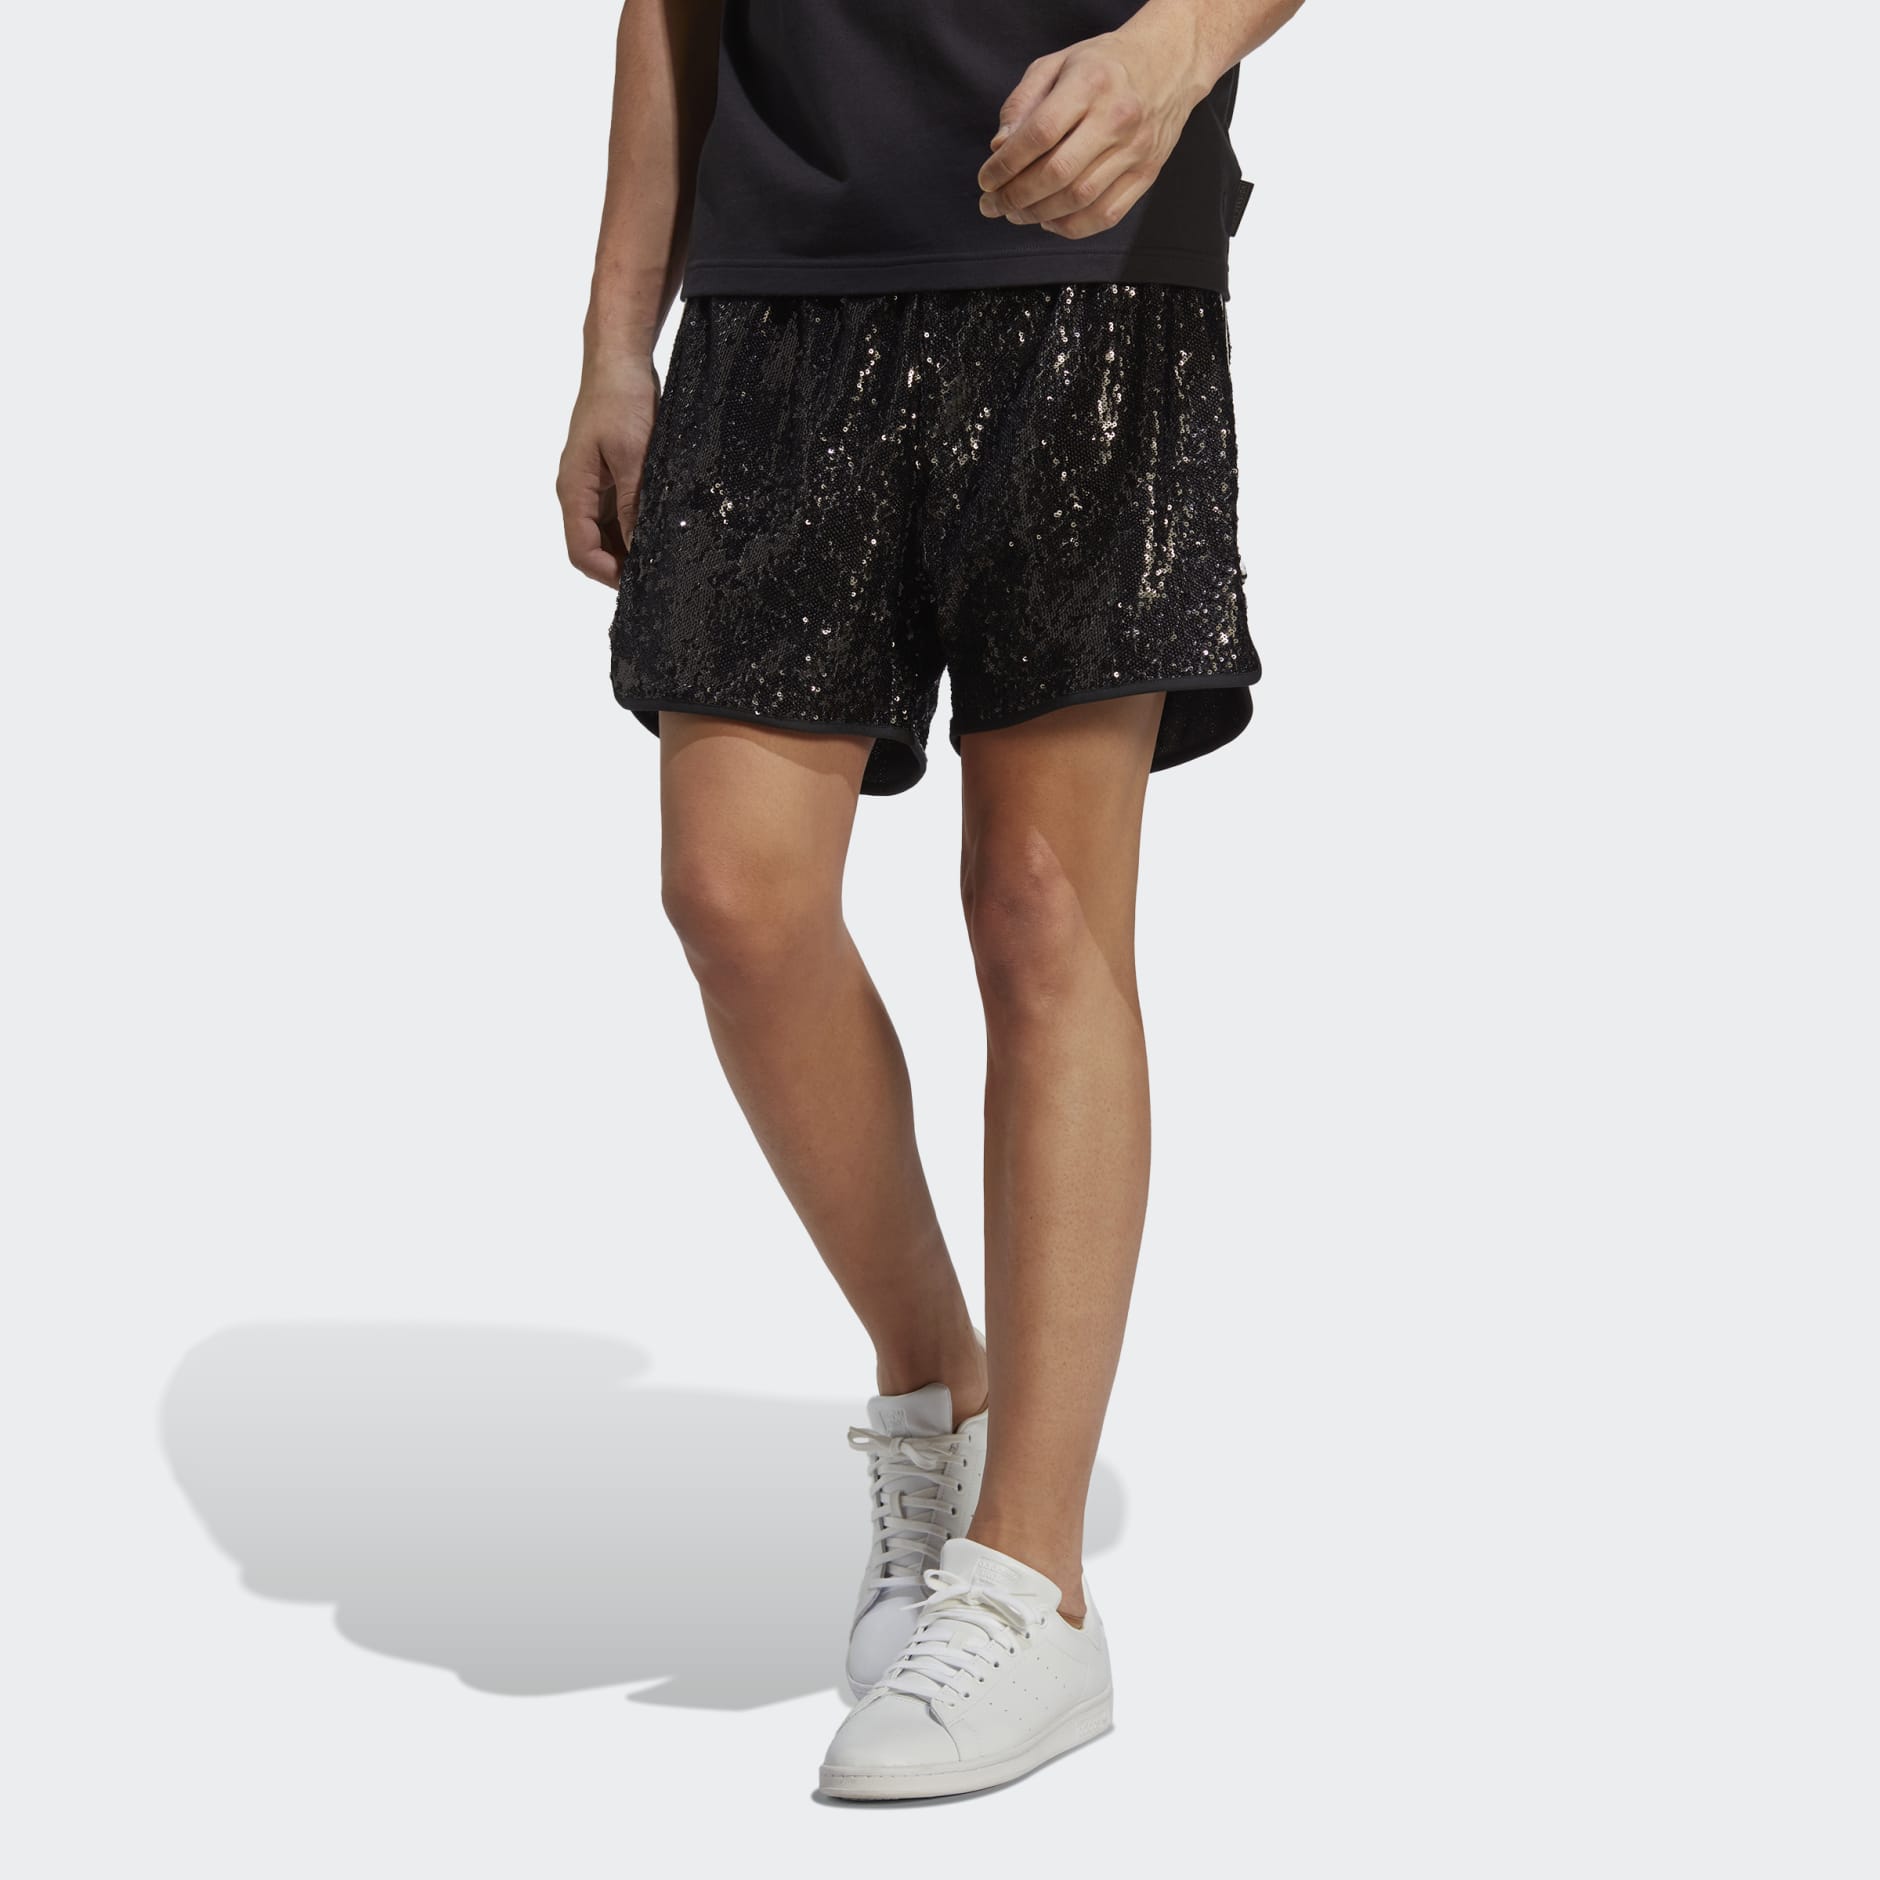 Sequin Knicker Shorts & Sheer Mesh Bodysuit Set - Lola Loves Boutique